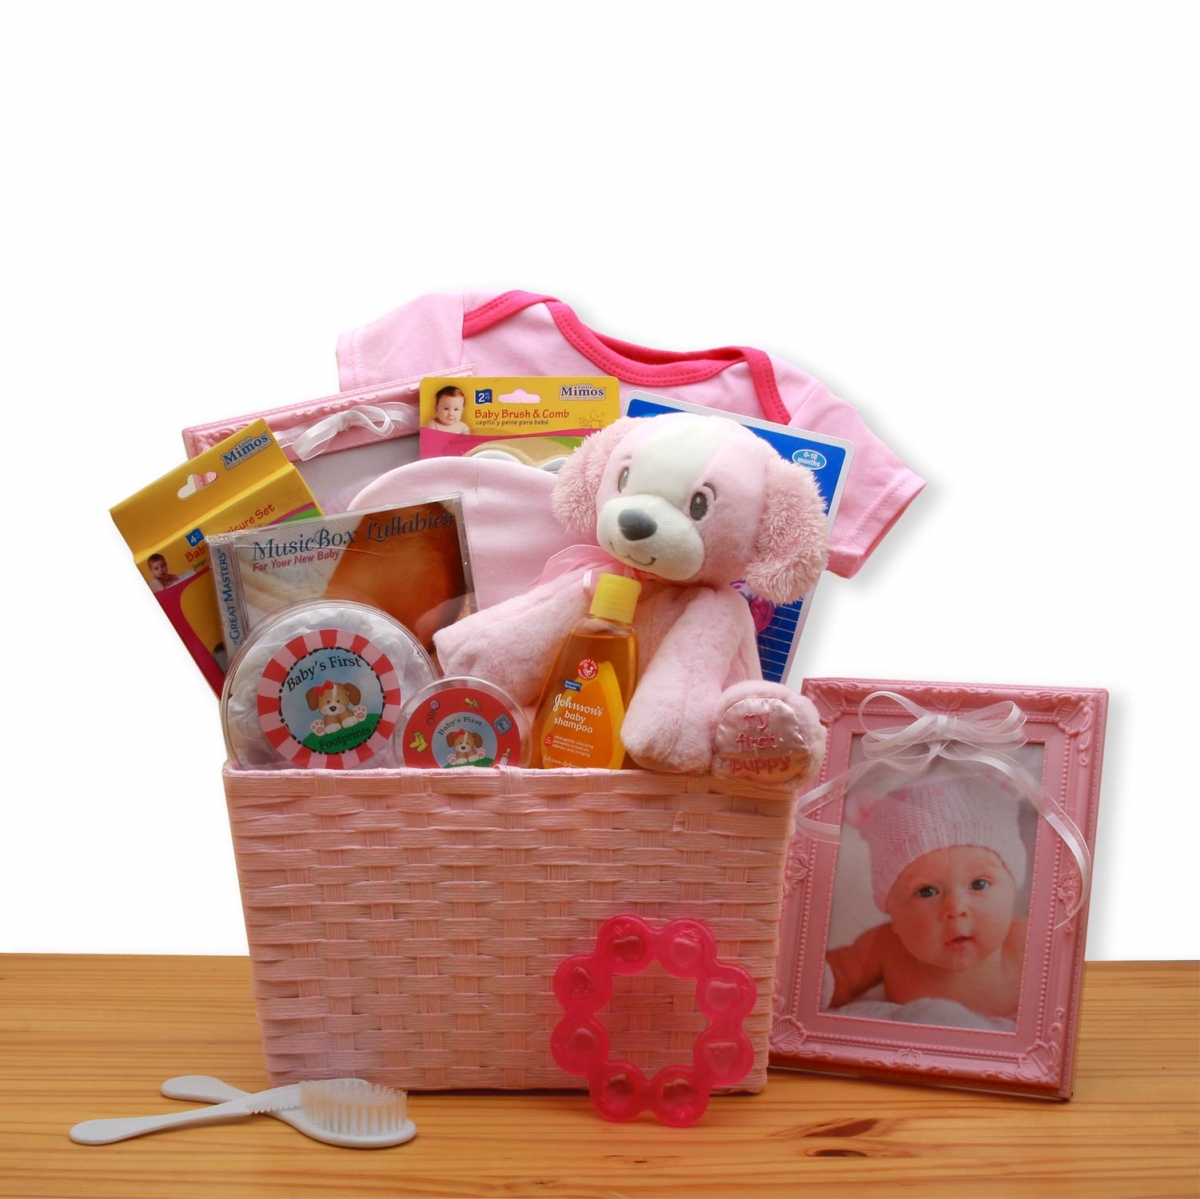 890752-p Puppy Love New Baby Gift Basket - Pink